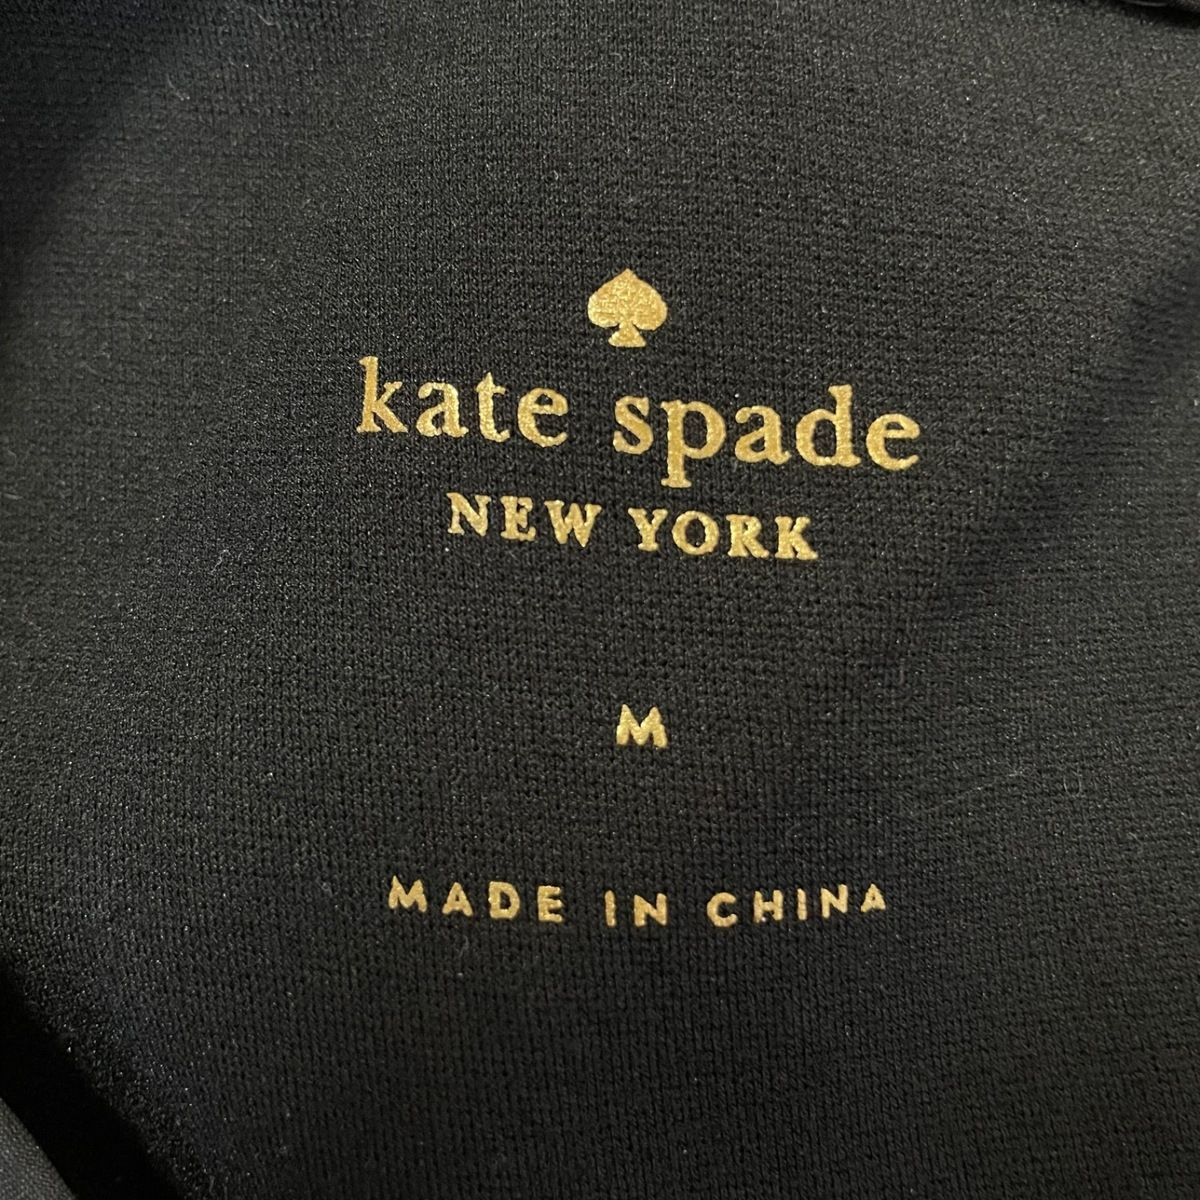 Kate spade(ケイトスペード) ワンピース サイズM レディース美品 - 黒 ...